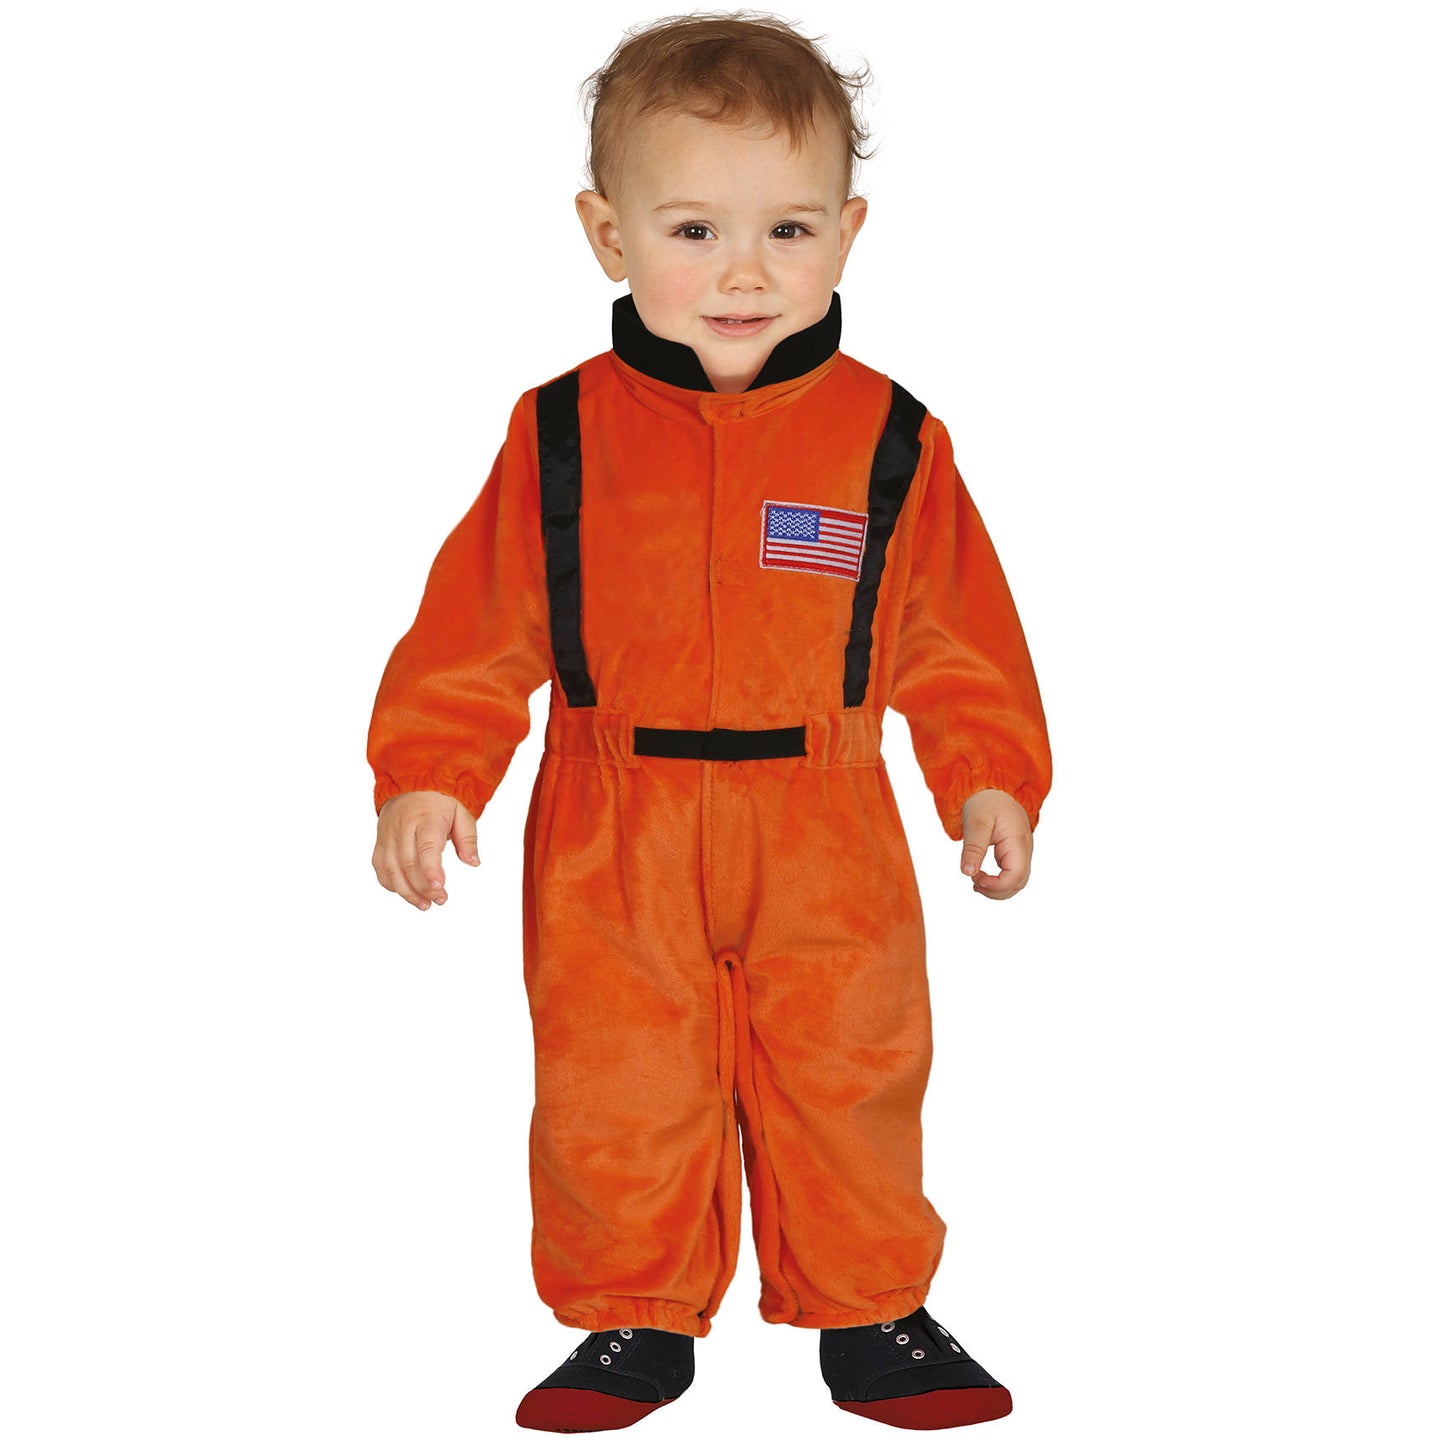 Astronaut orange Gruppenkostüme